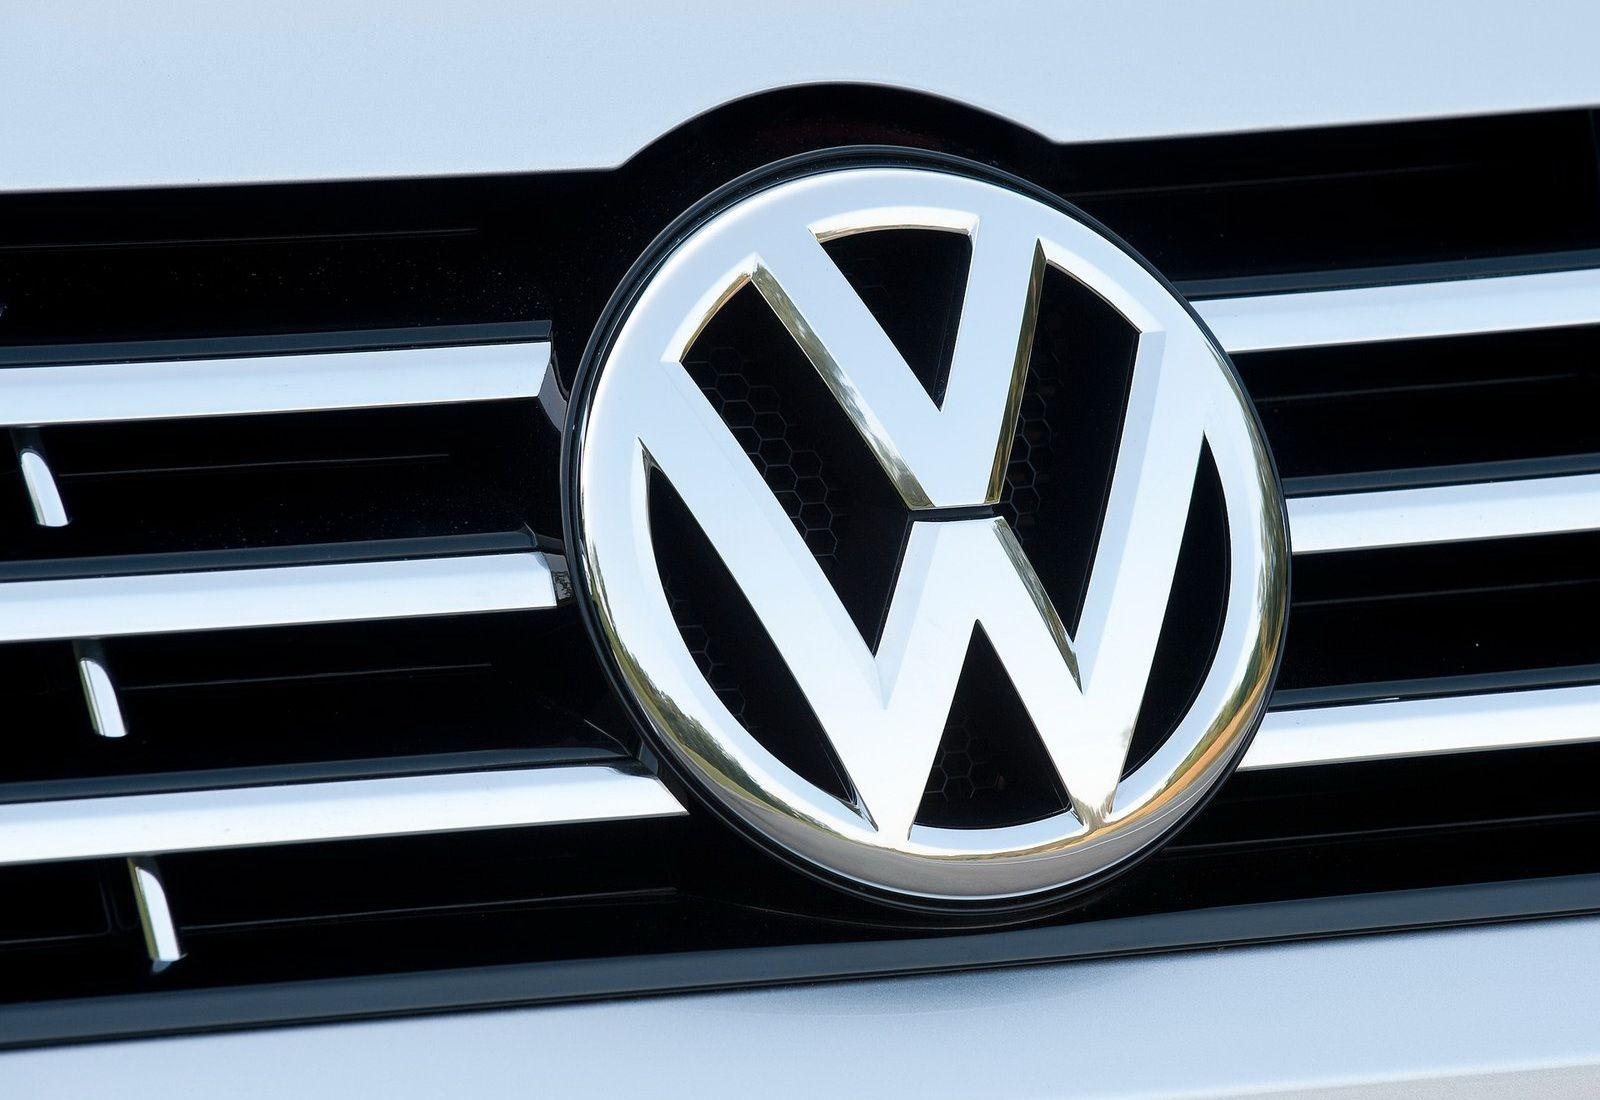 VW Car Logo - Volkswagen Logo, Volkswagen Car Symbol Meaning and History. Car